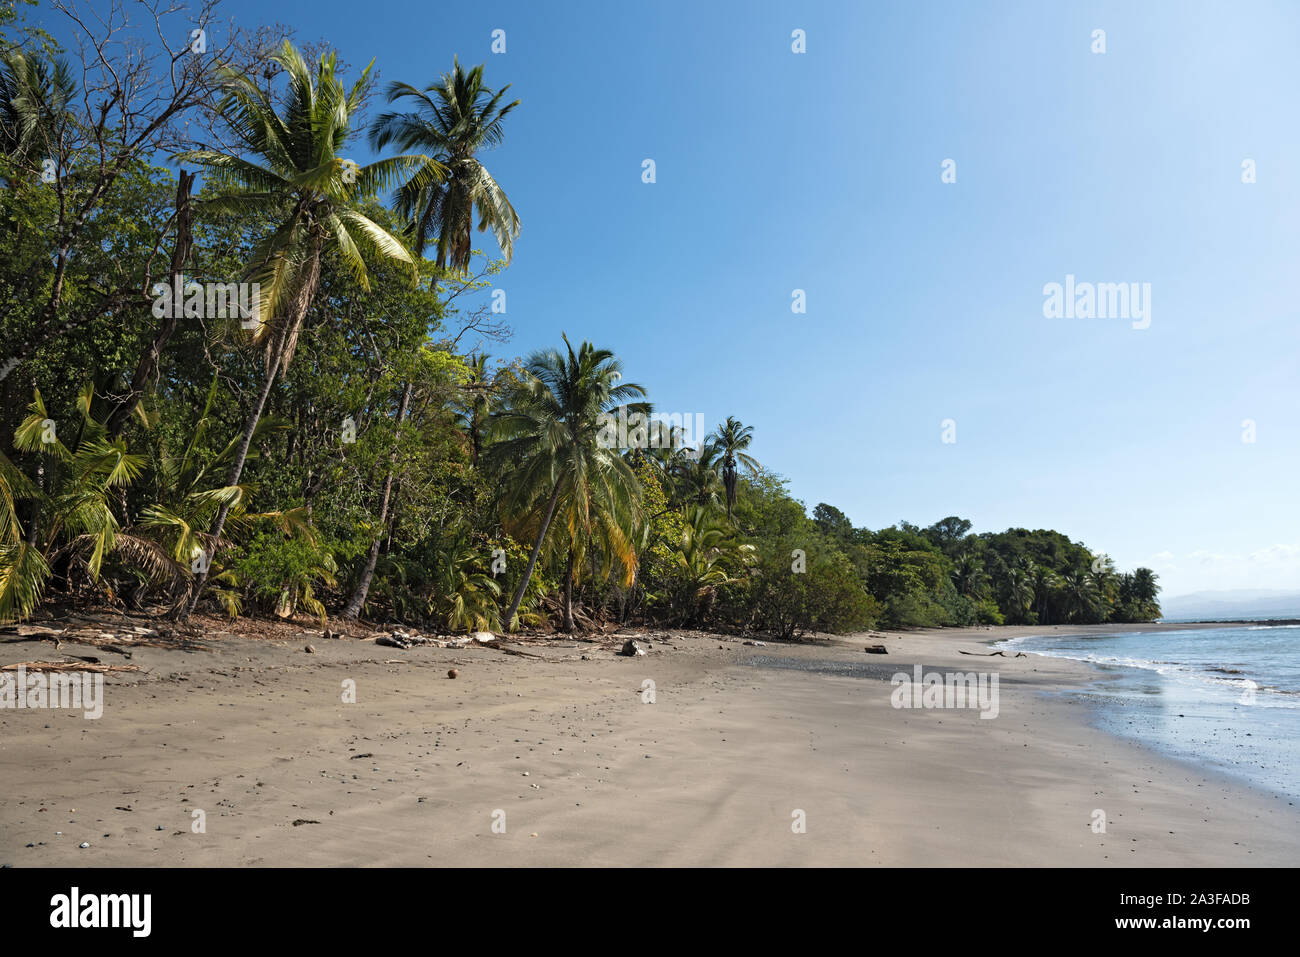 beautiful sandy beach on the island cebaco panama Stock Photo